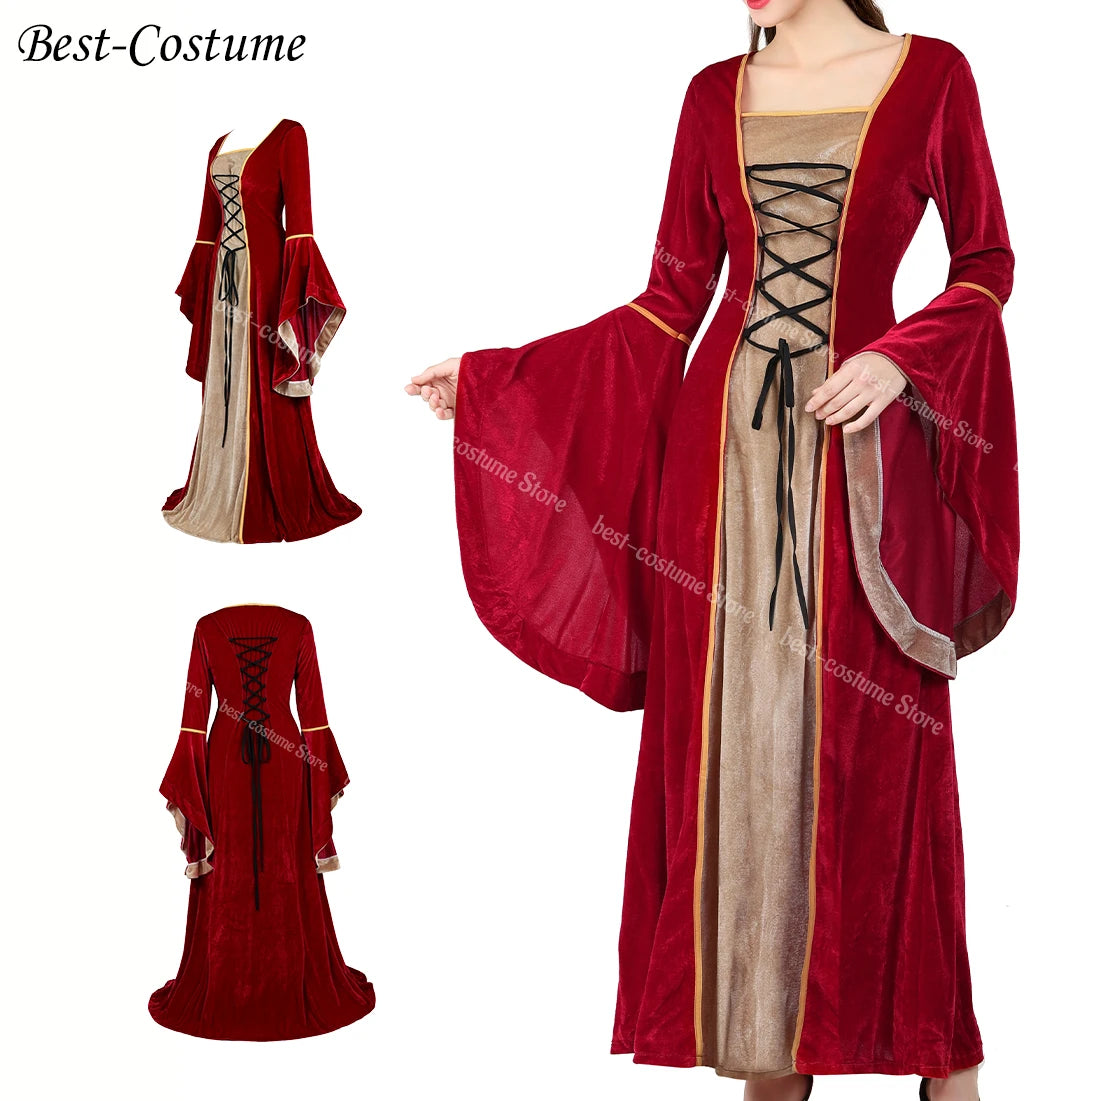 Women Medieval Renaissance Dress Cosplay Halloween Costumes Plus Size Elegant Velvet Dress Long Sleeves Green Victorian Gown